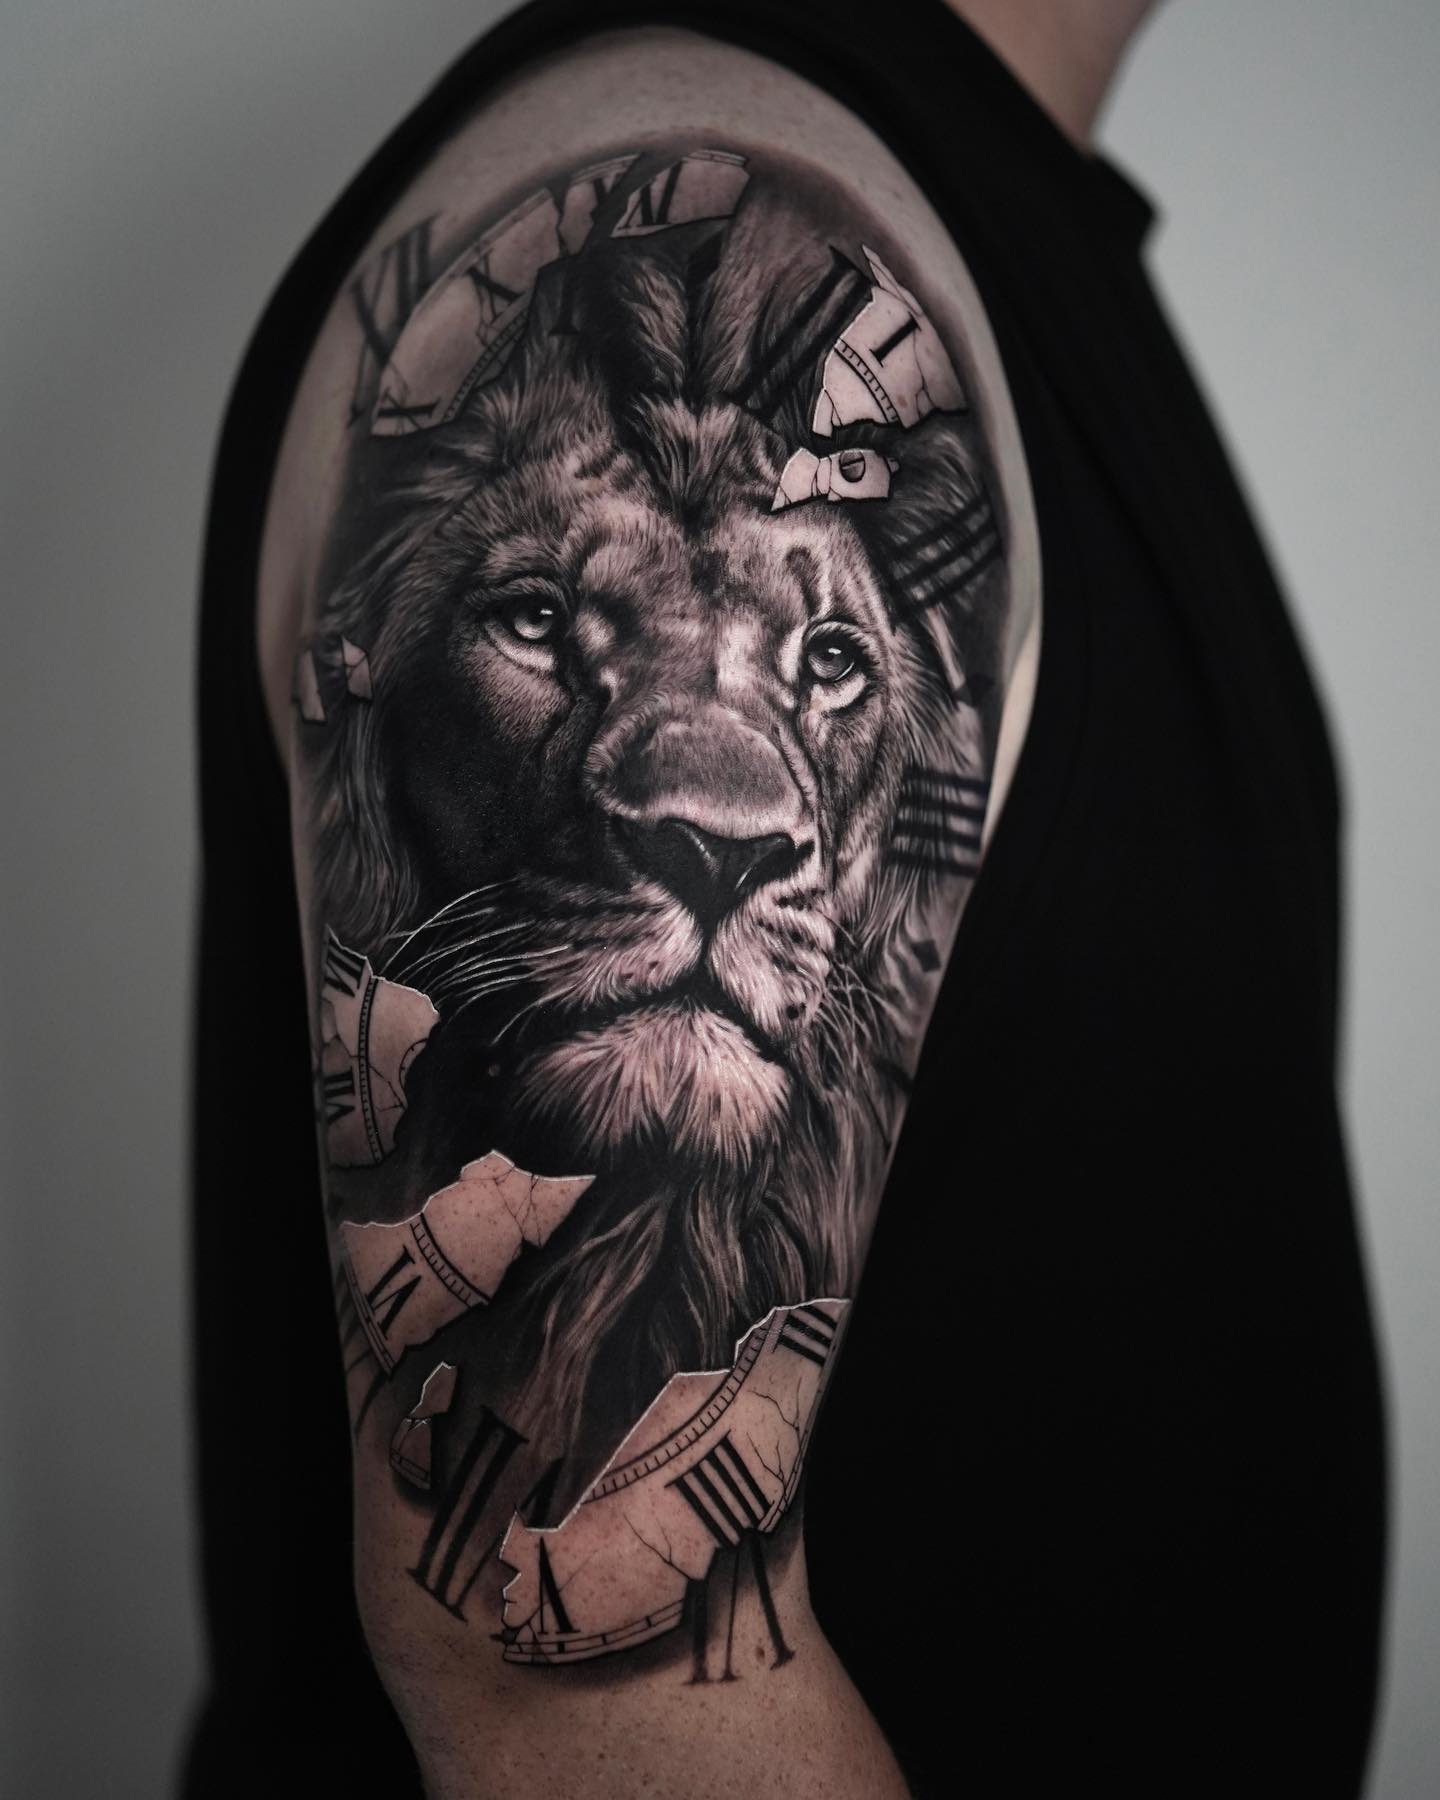 3D Lion on Clock Face Tattoo